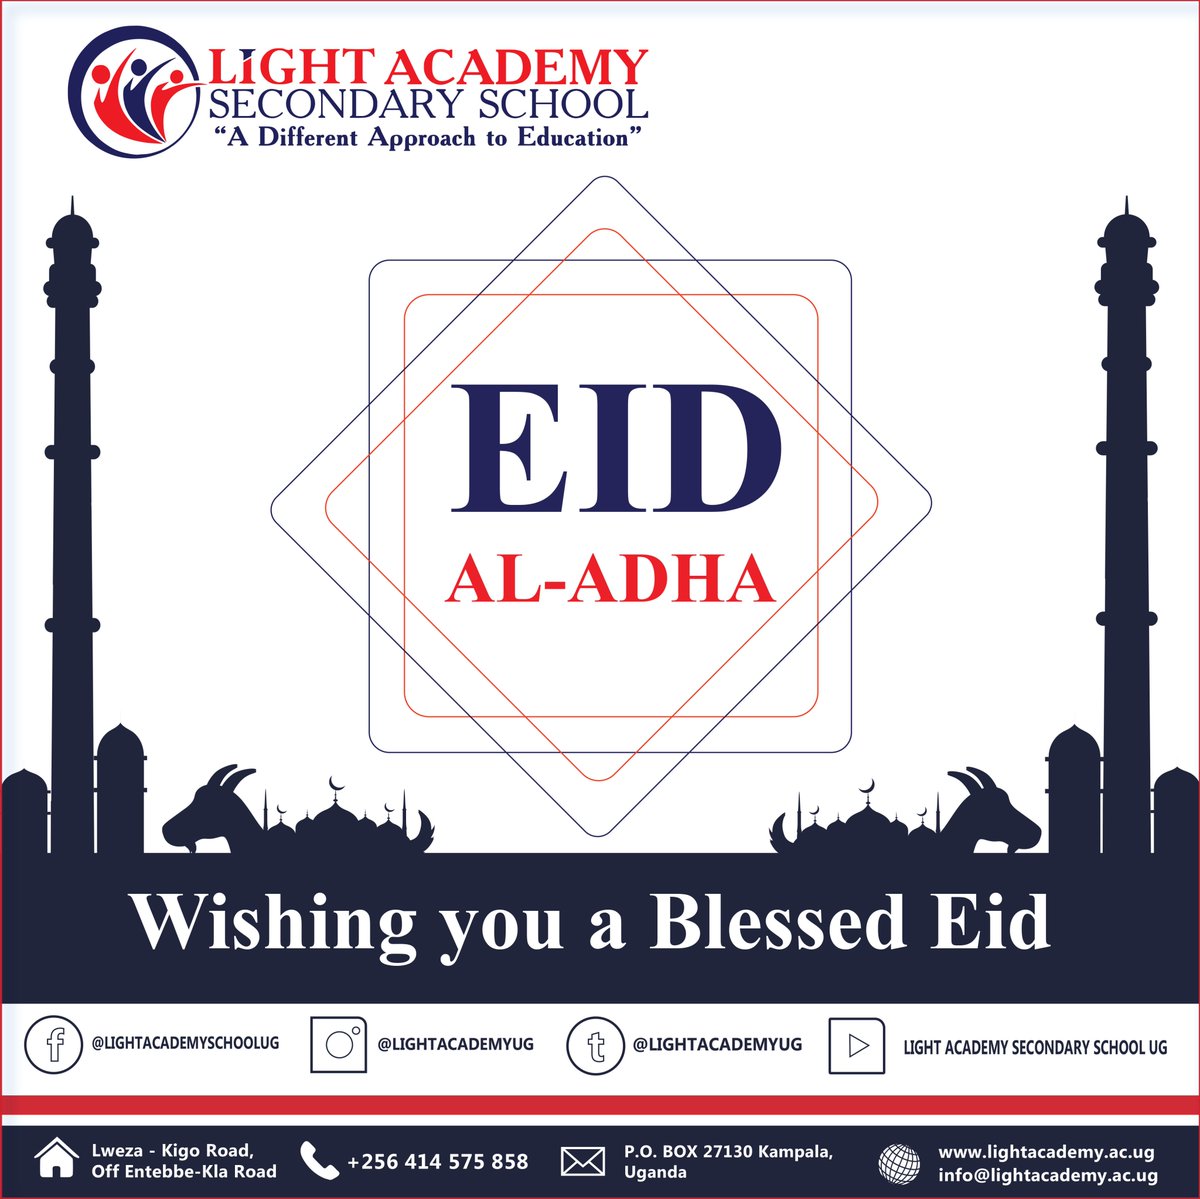 The #LAcommunity wishes you a blessed Eid 😊
#lightacademy #a_different_approach_to_education
#LAdiversity #EidAlAdha #Eidmubarak